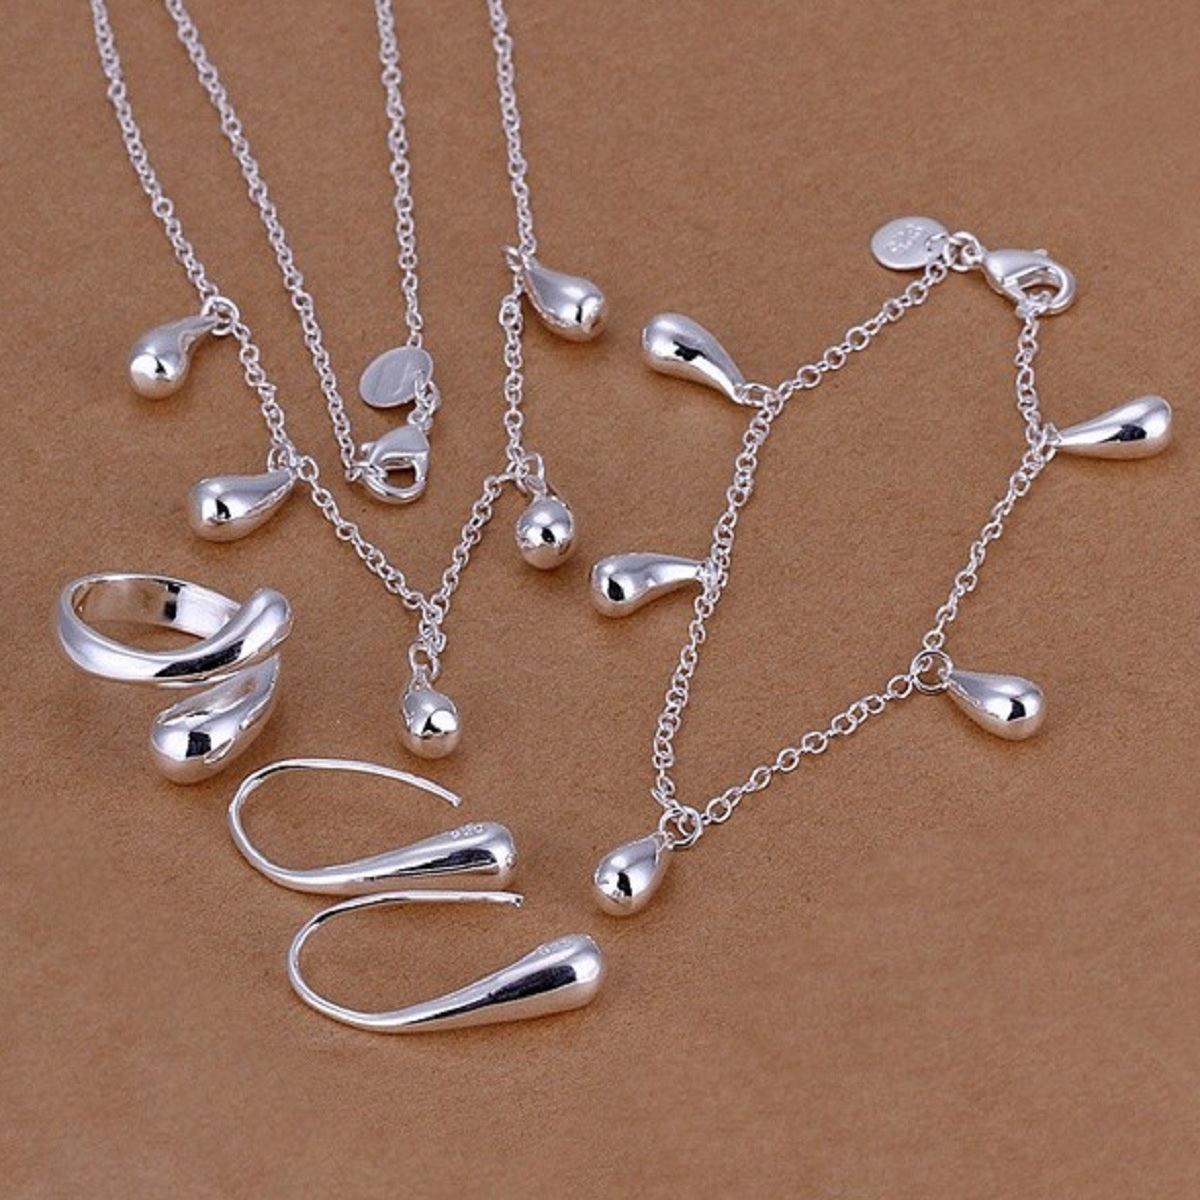 N925-sterling Silver color fashion jewelry drop necklace & bracelet & ring adjustable & earrings ladies jewelry set SS223 - dealskart.com.au